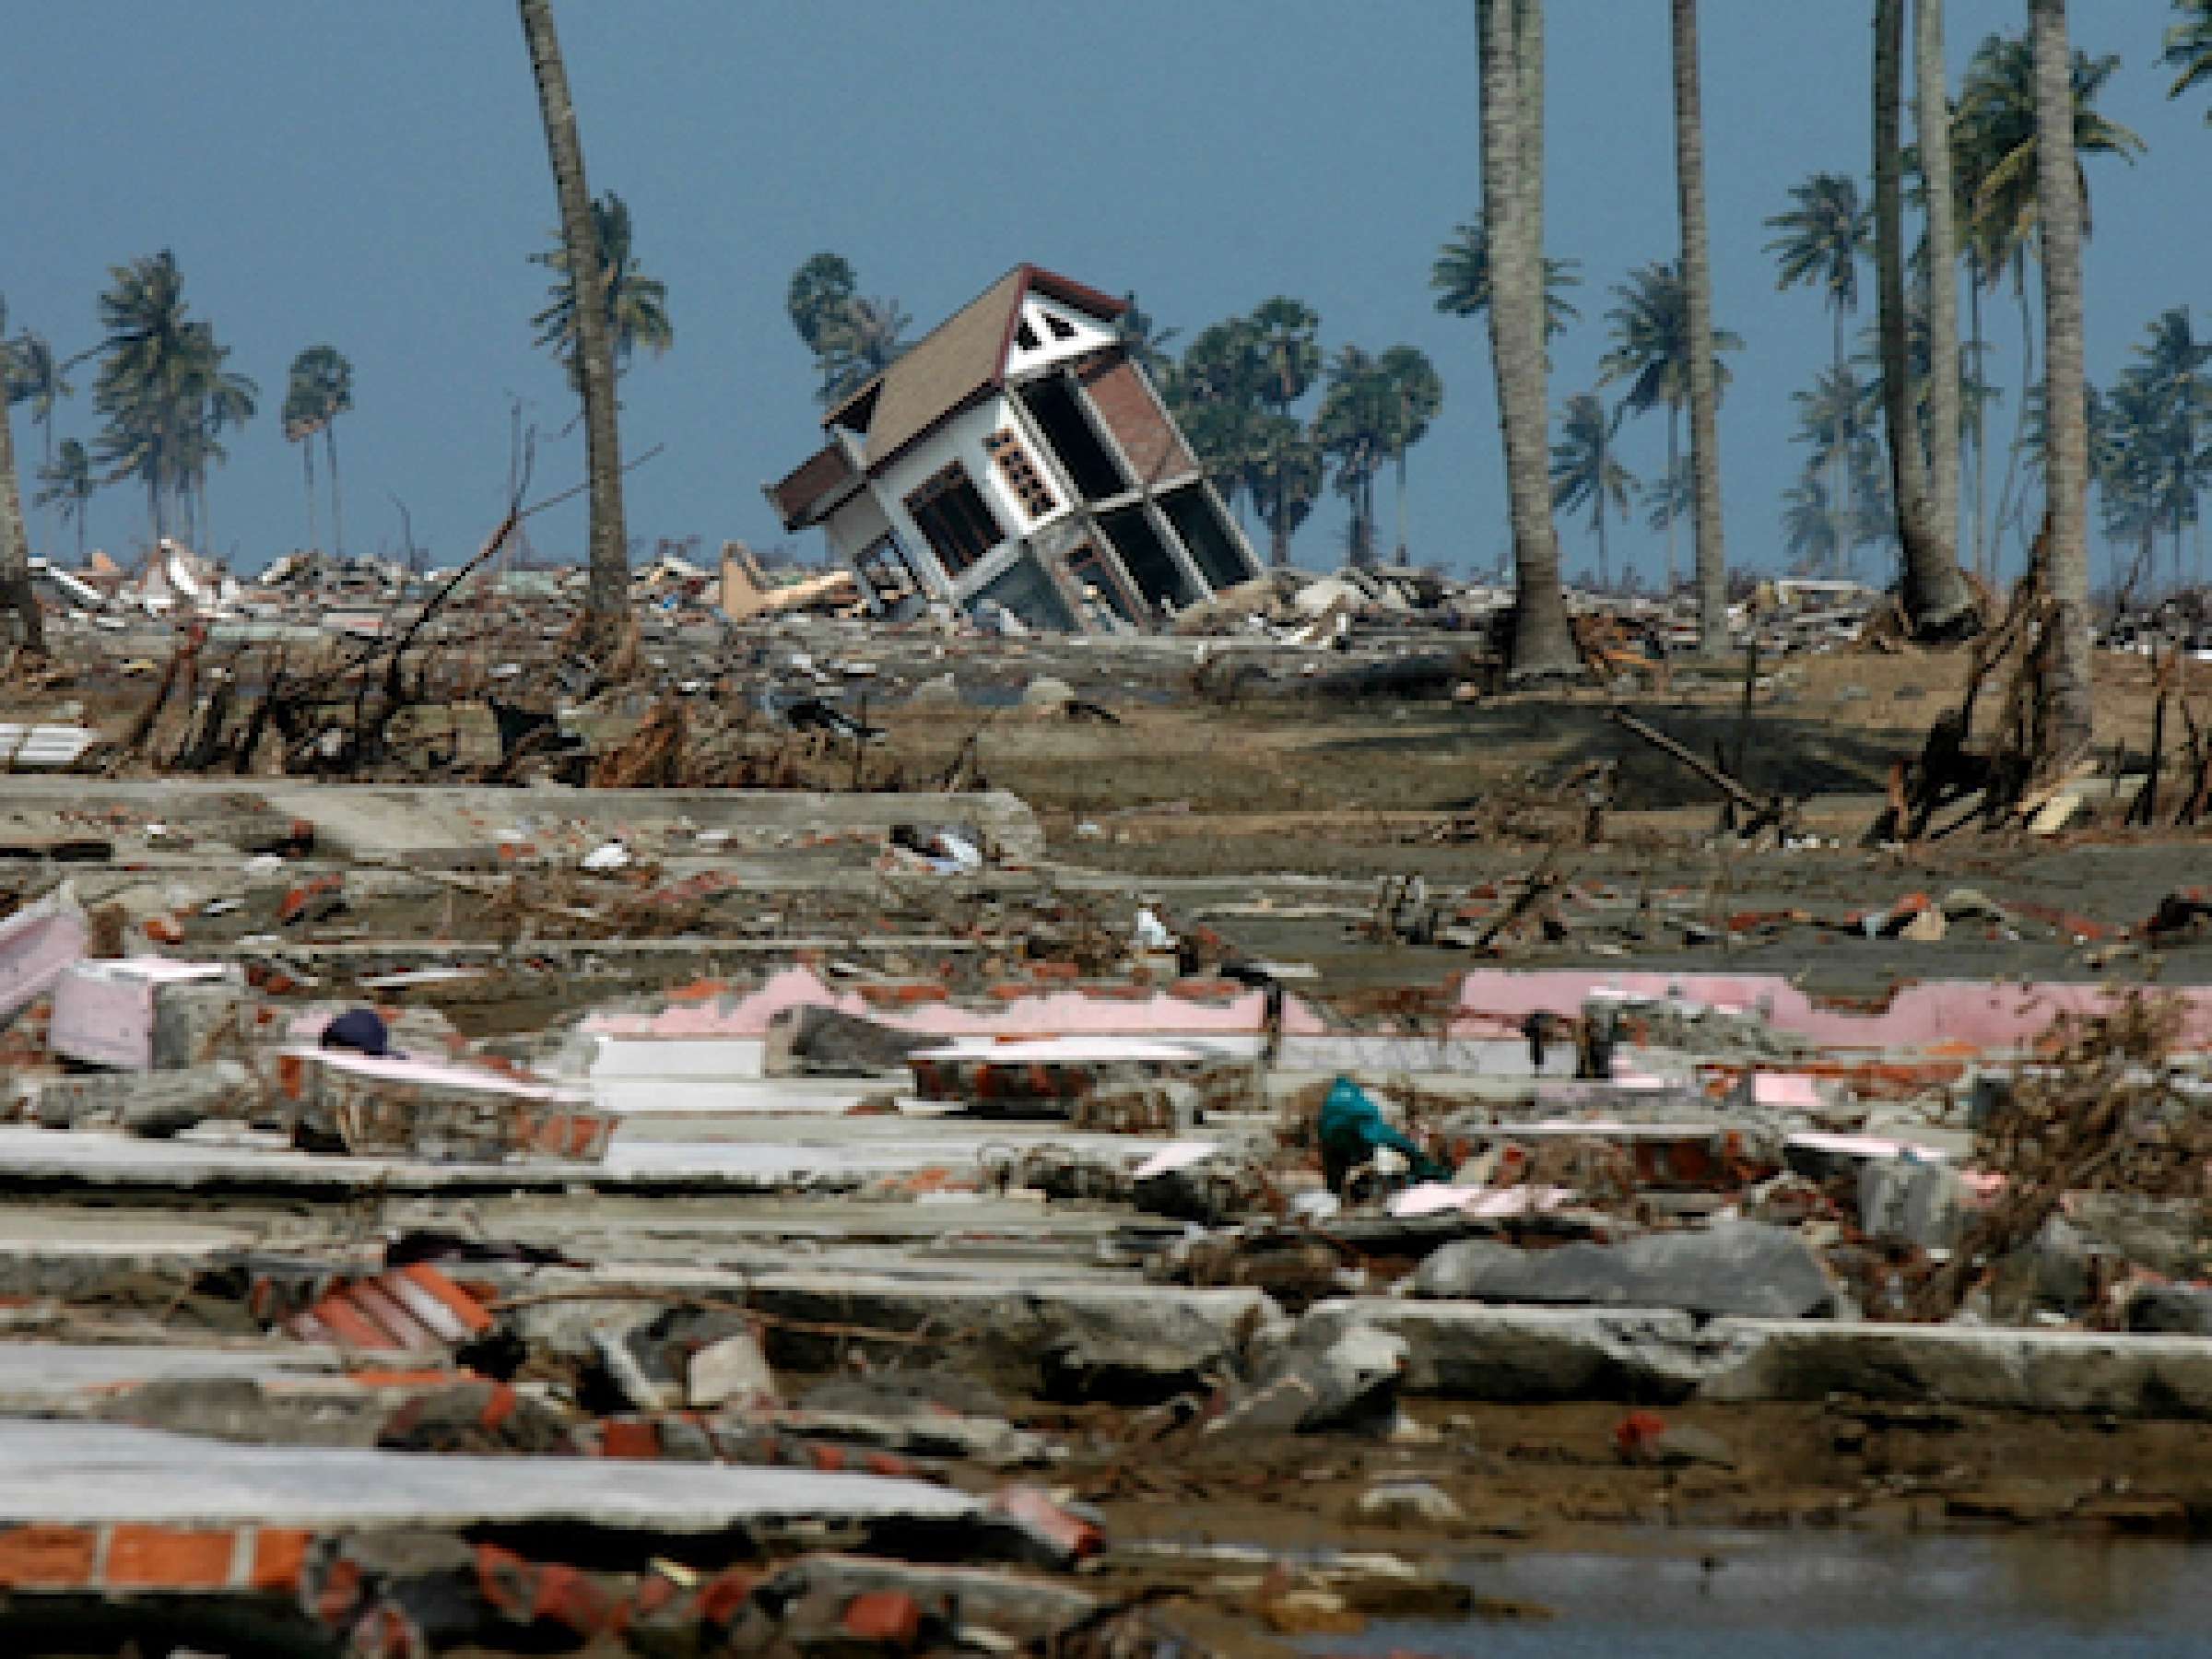  Indian Ocean Earthquake and Tsunami disaster 